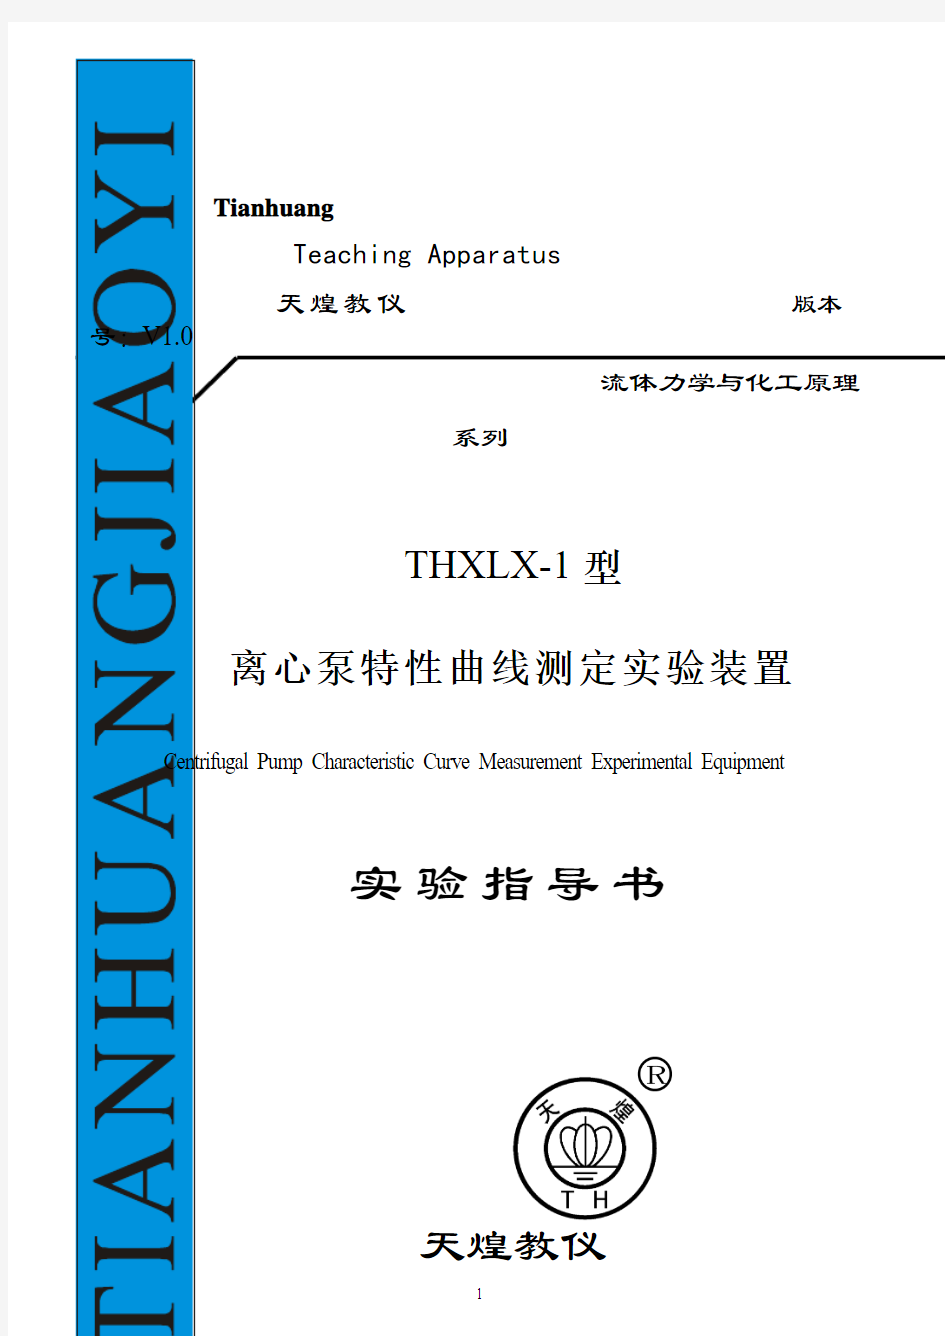 THXLX-1型离心泵特性曲线测定实验指导书